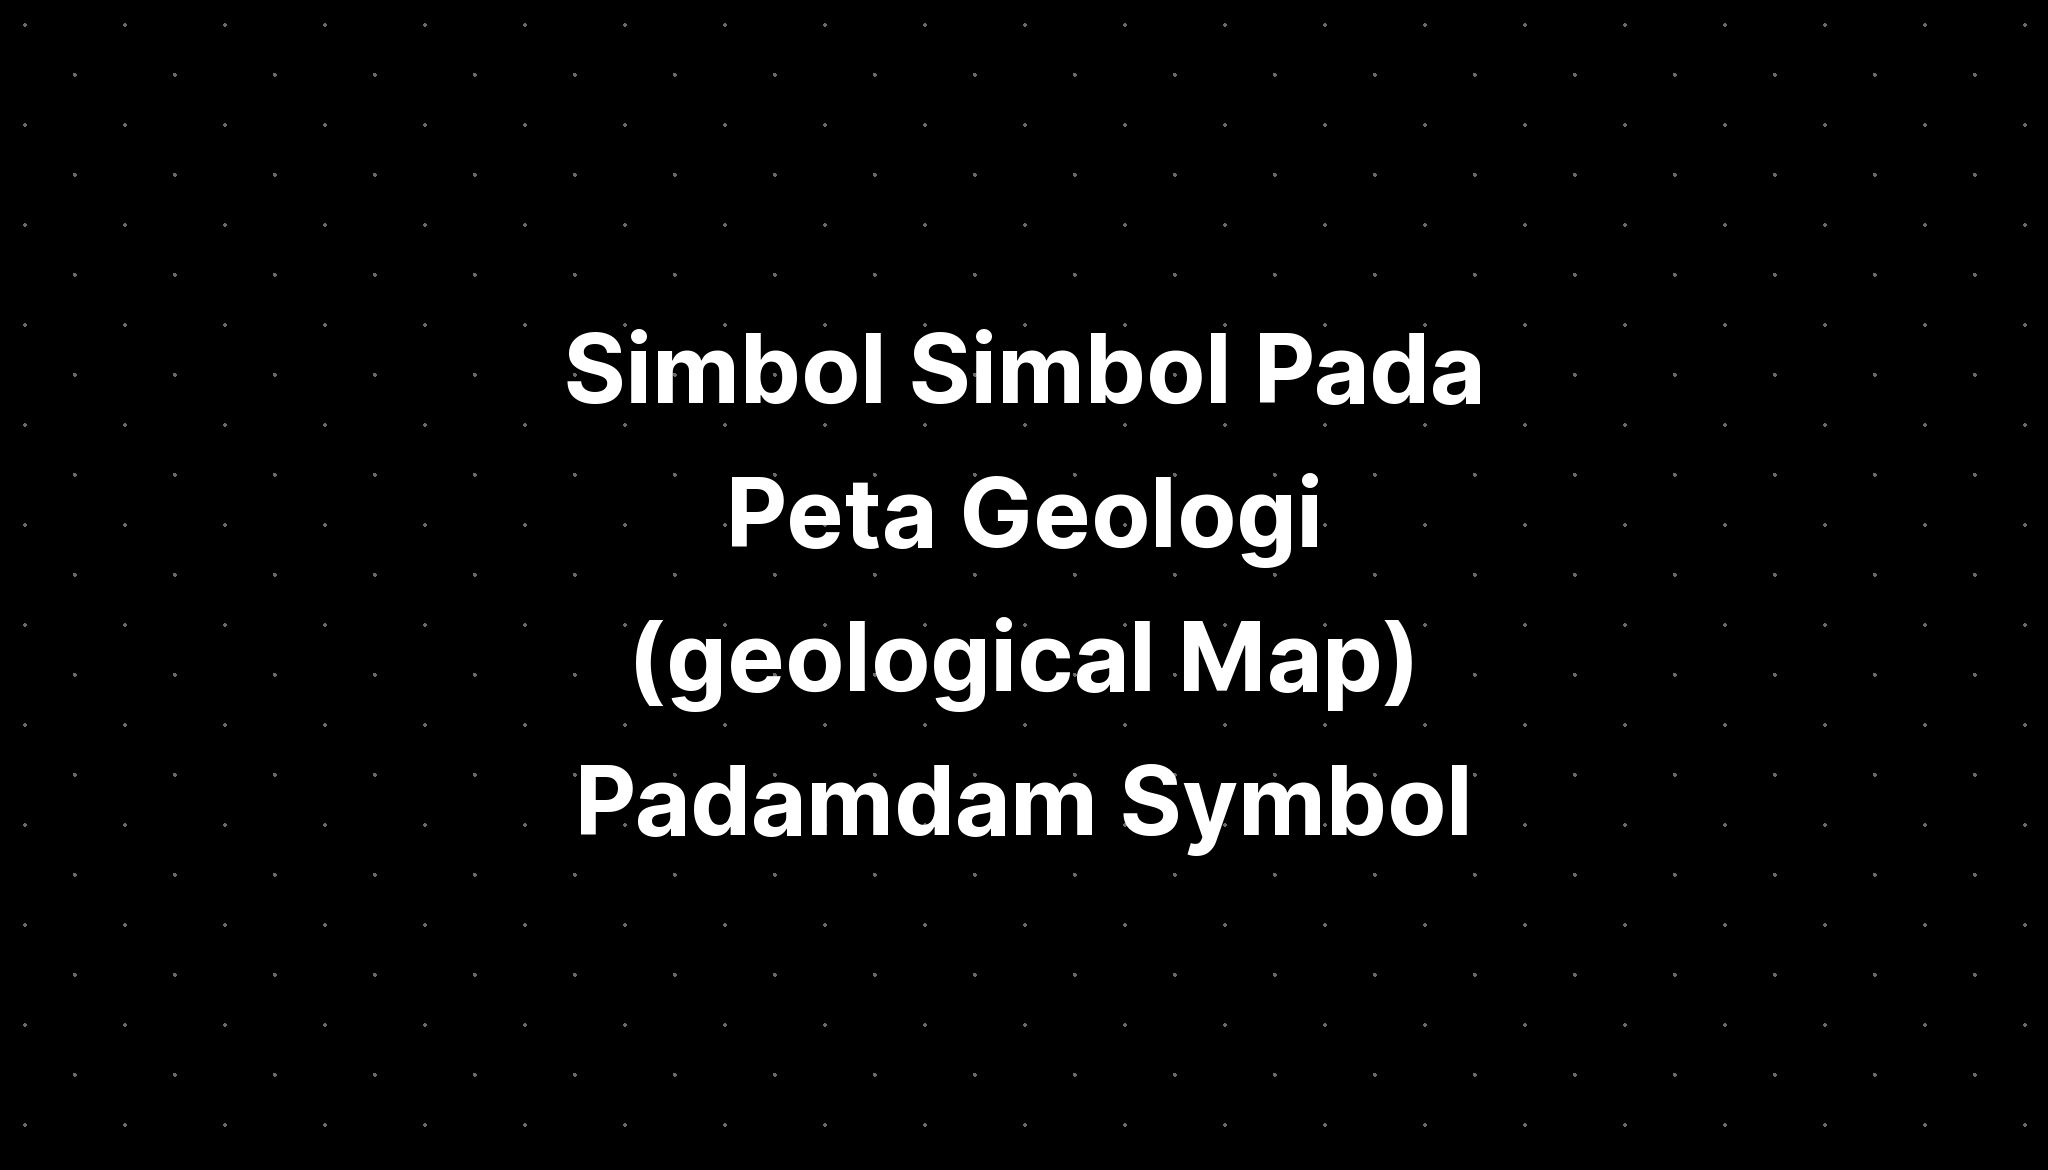 Simbol Simbol Pada Peta Geologi Geological Map Padamdam Symbol Imagesee